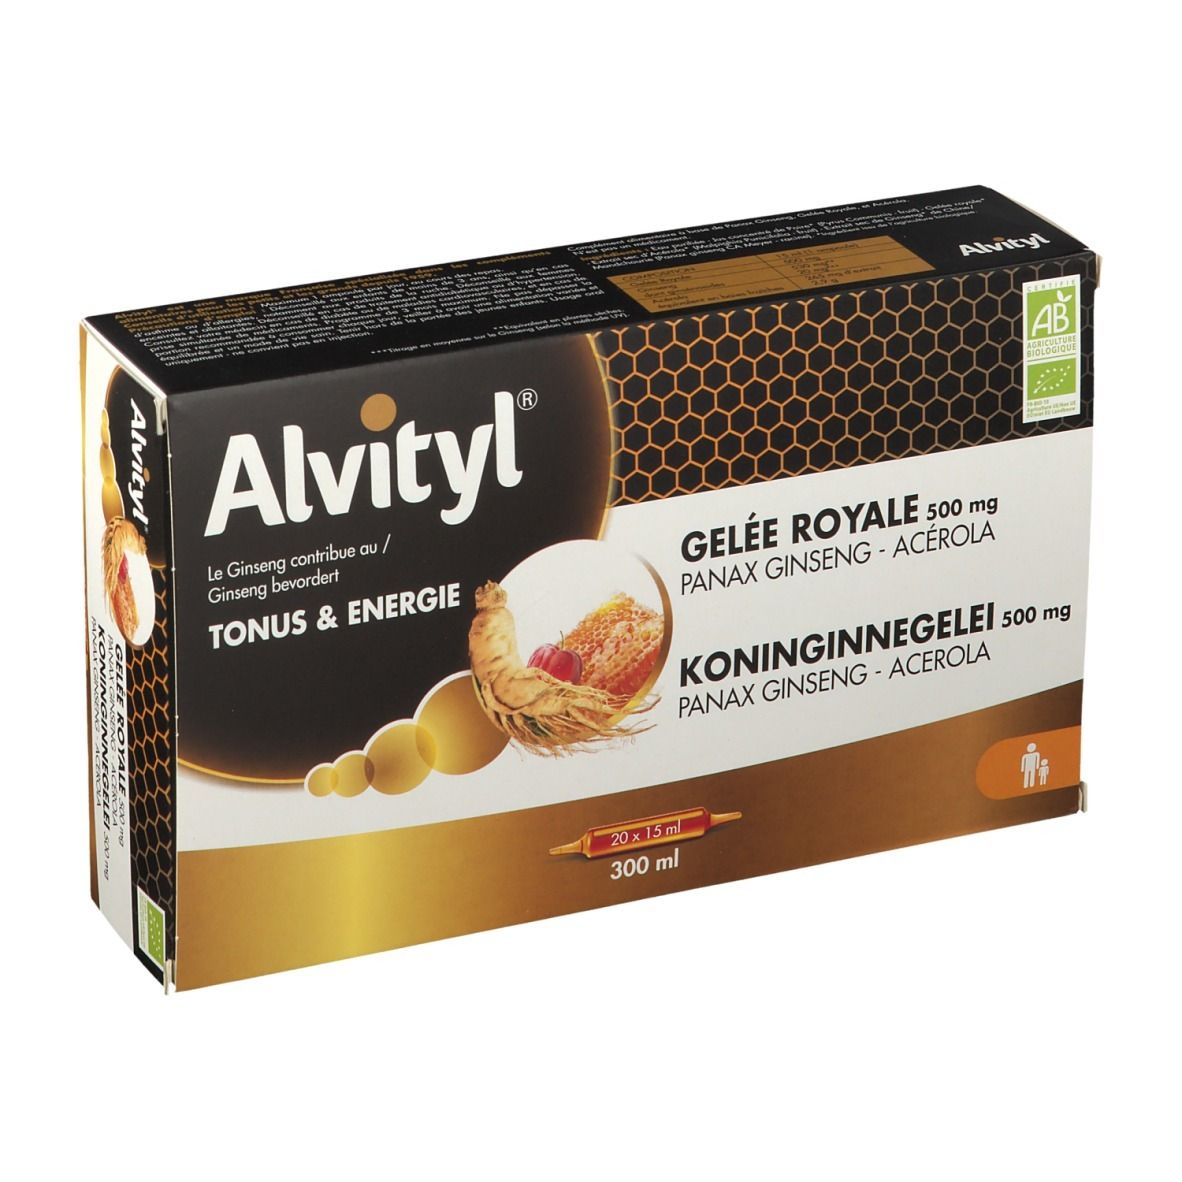 Image of Alvityl® Gelée royale Ginseng & Acerola